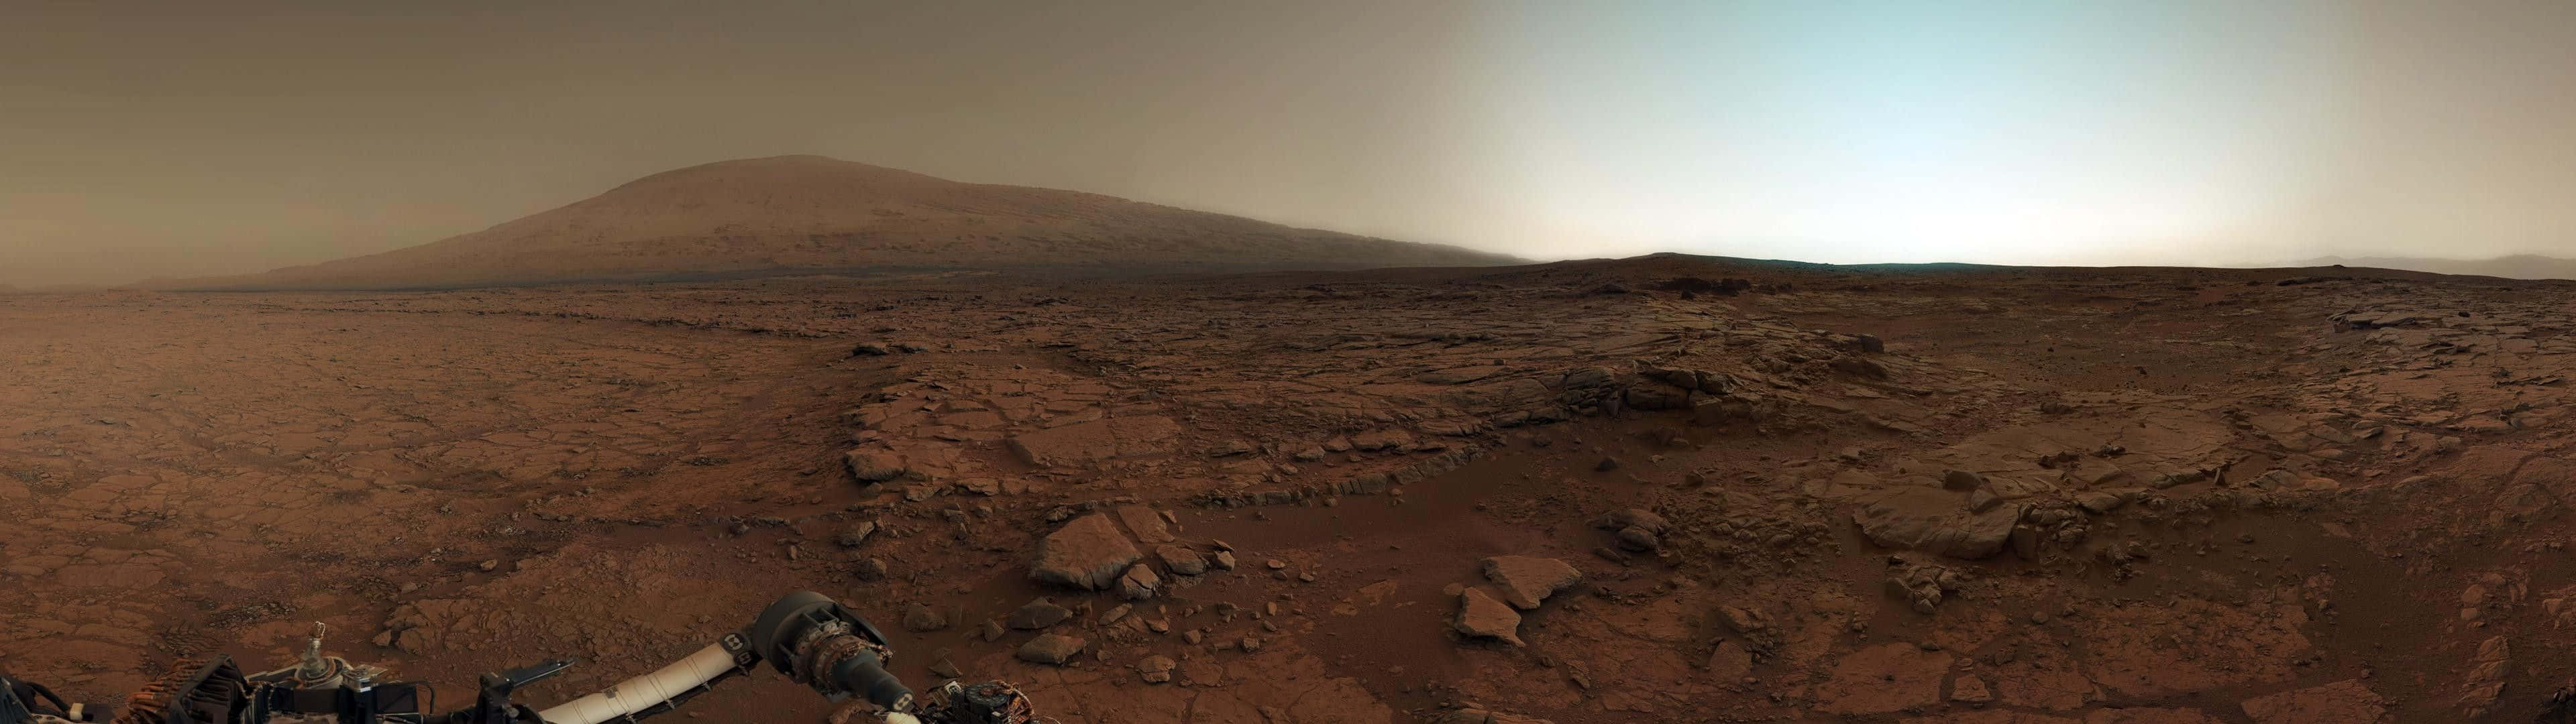 Stunning Panoramic View of Mars Landscape Wallpaper